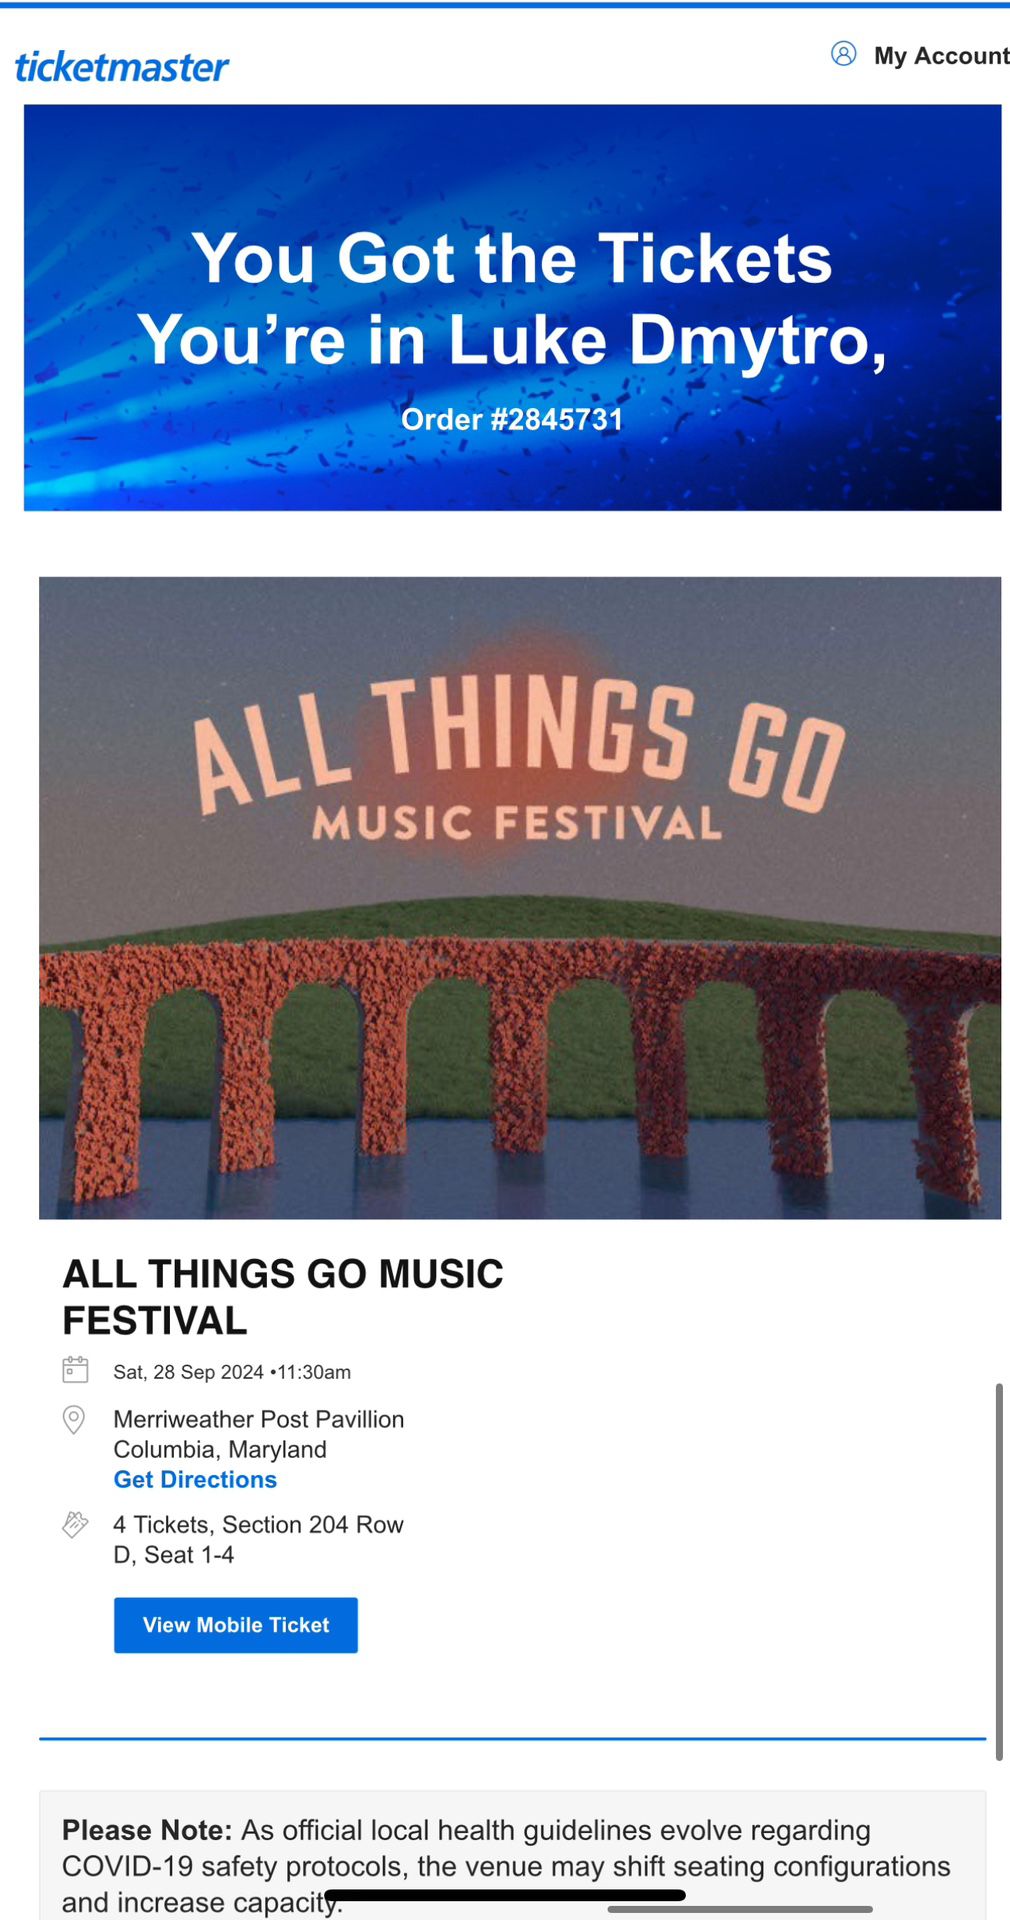 All Things Go Musical Festival 